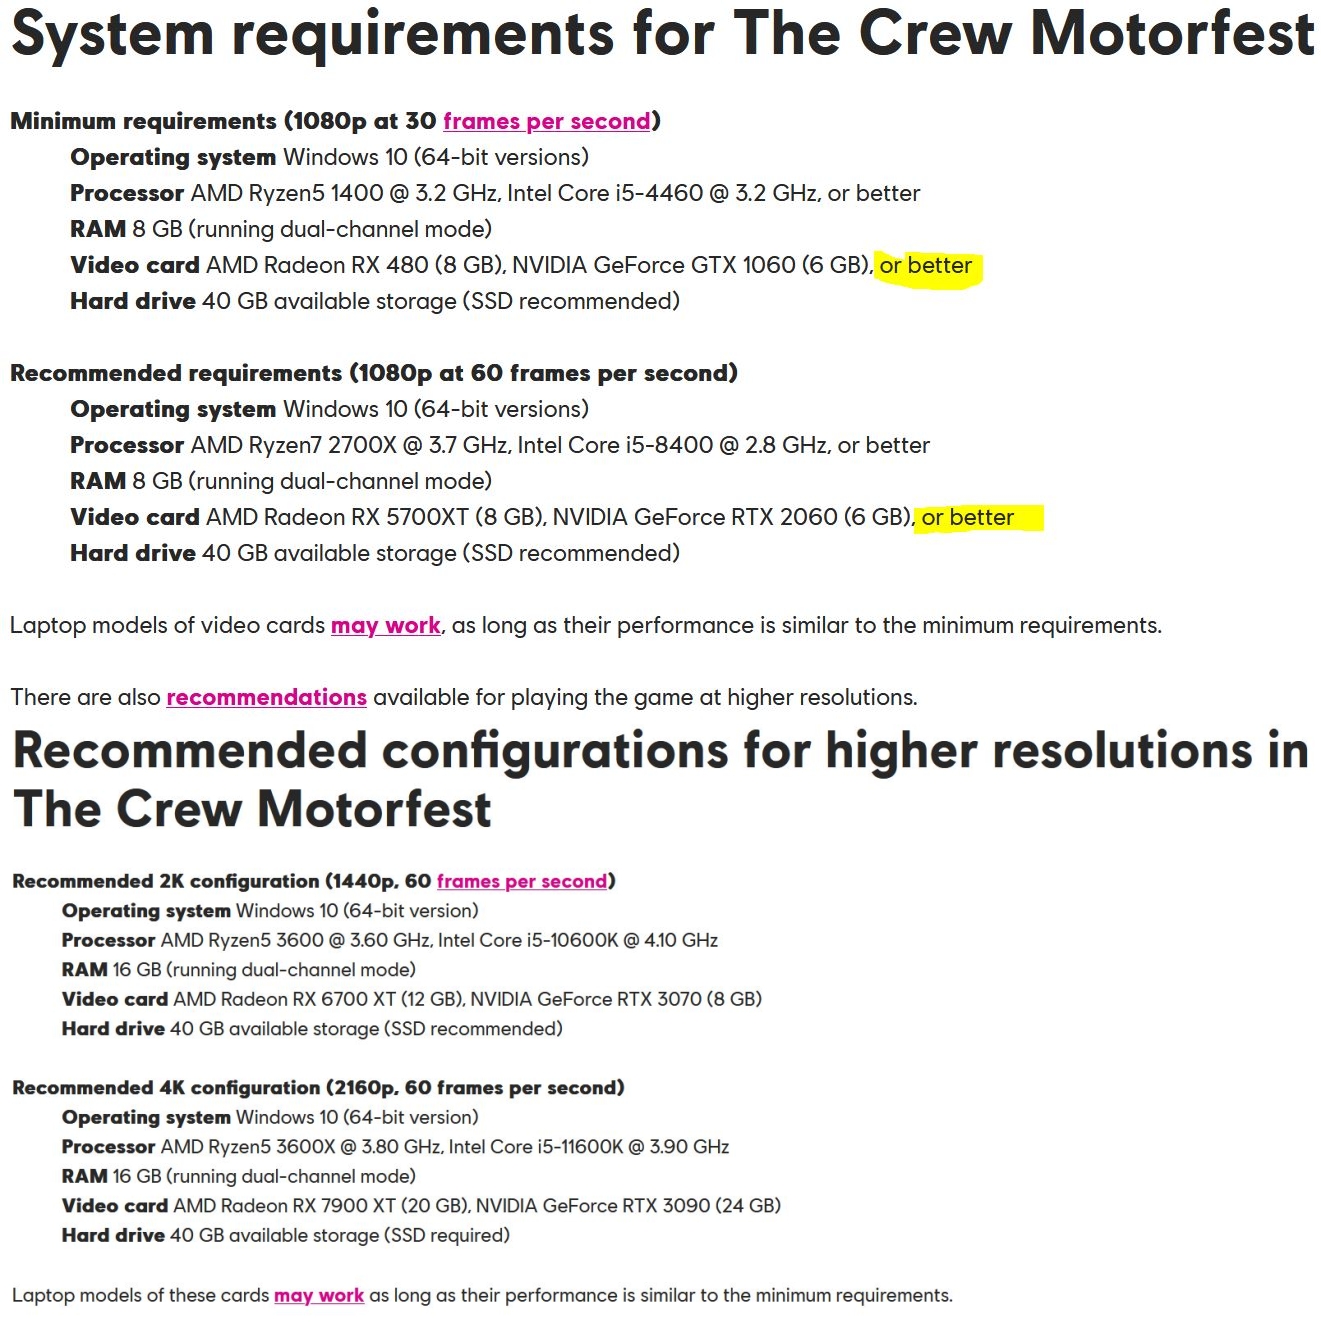 The Crew Motorfest PC requirements: Recommended & minimum specs